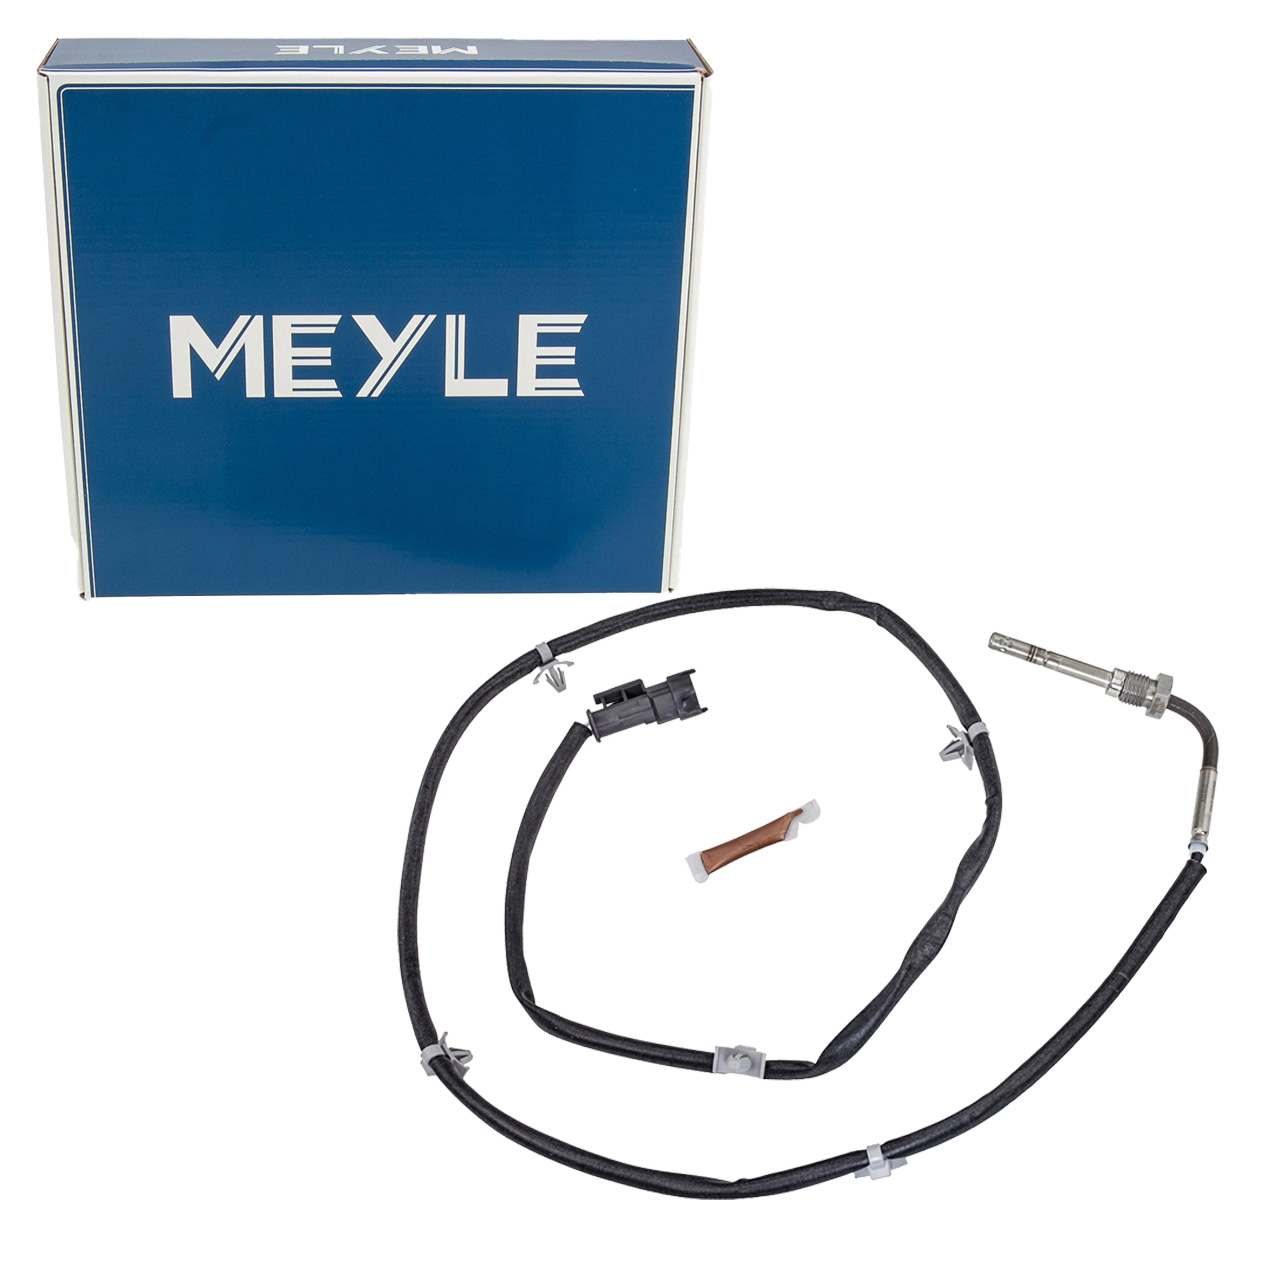 MEYLE 6148000053 Abgastemperatursensor Sensor für Rpf OPEL Corsa D 1.7 CDTI 55564270